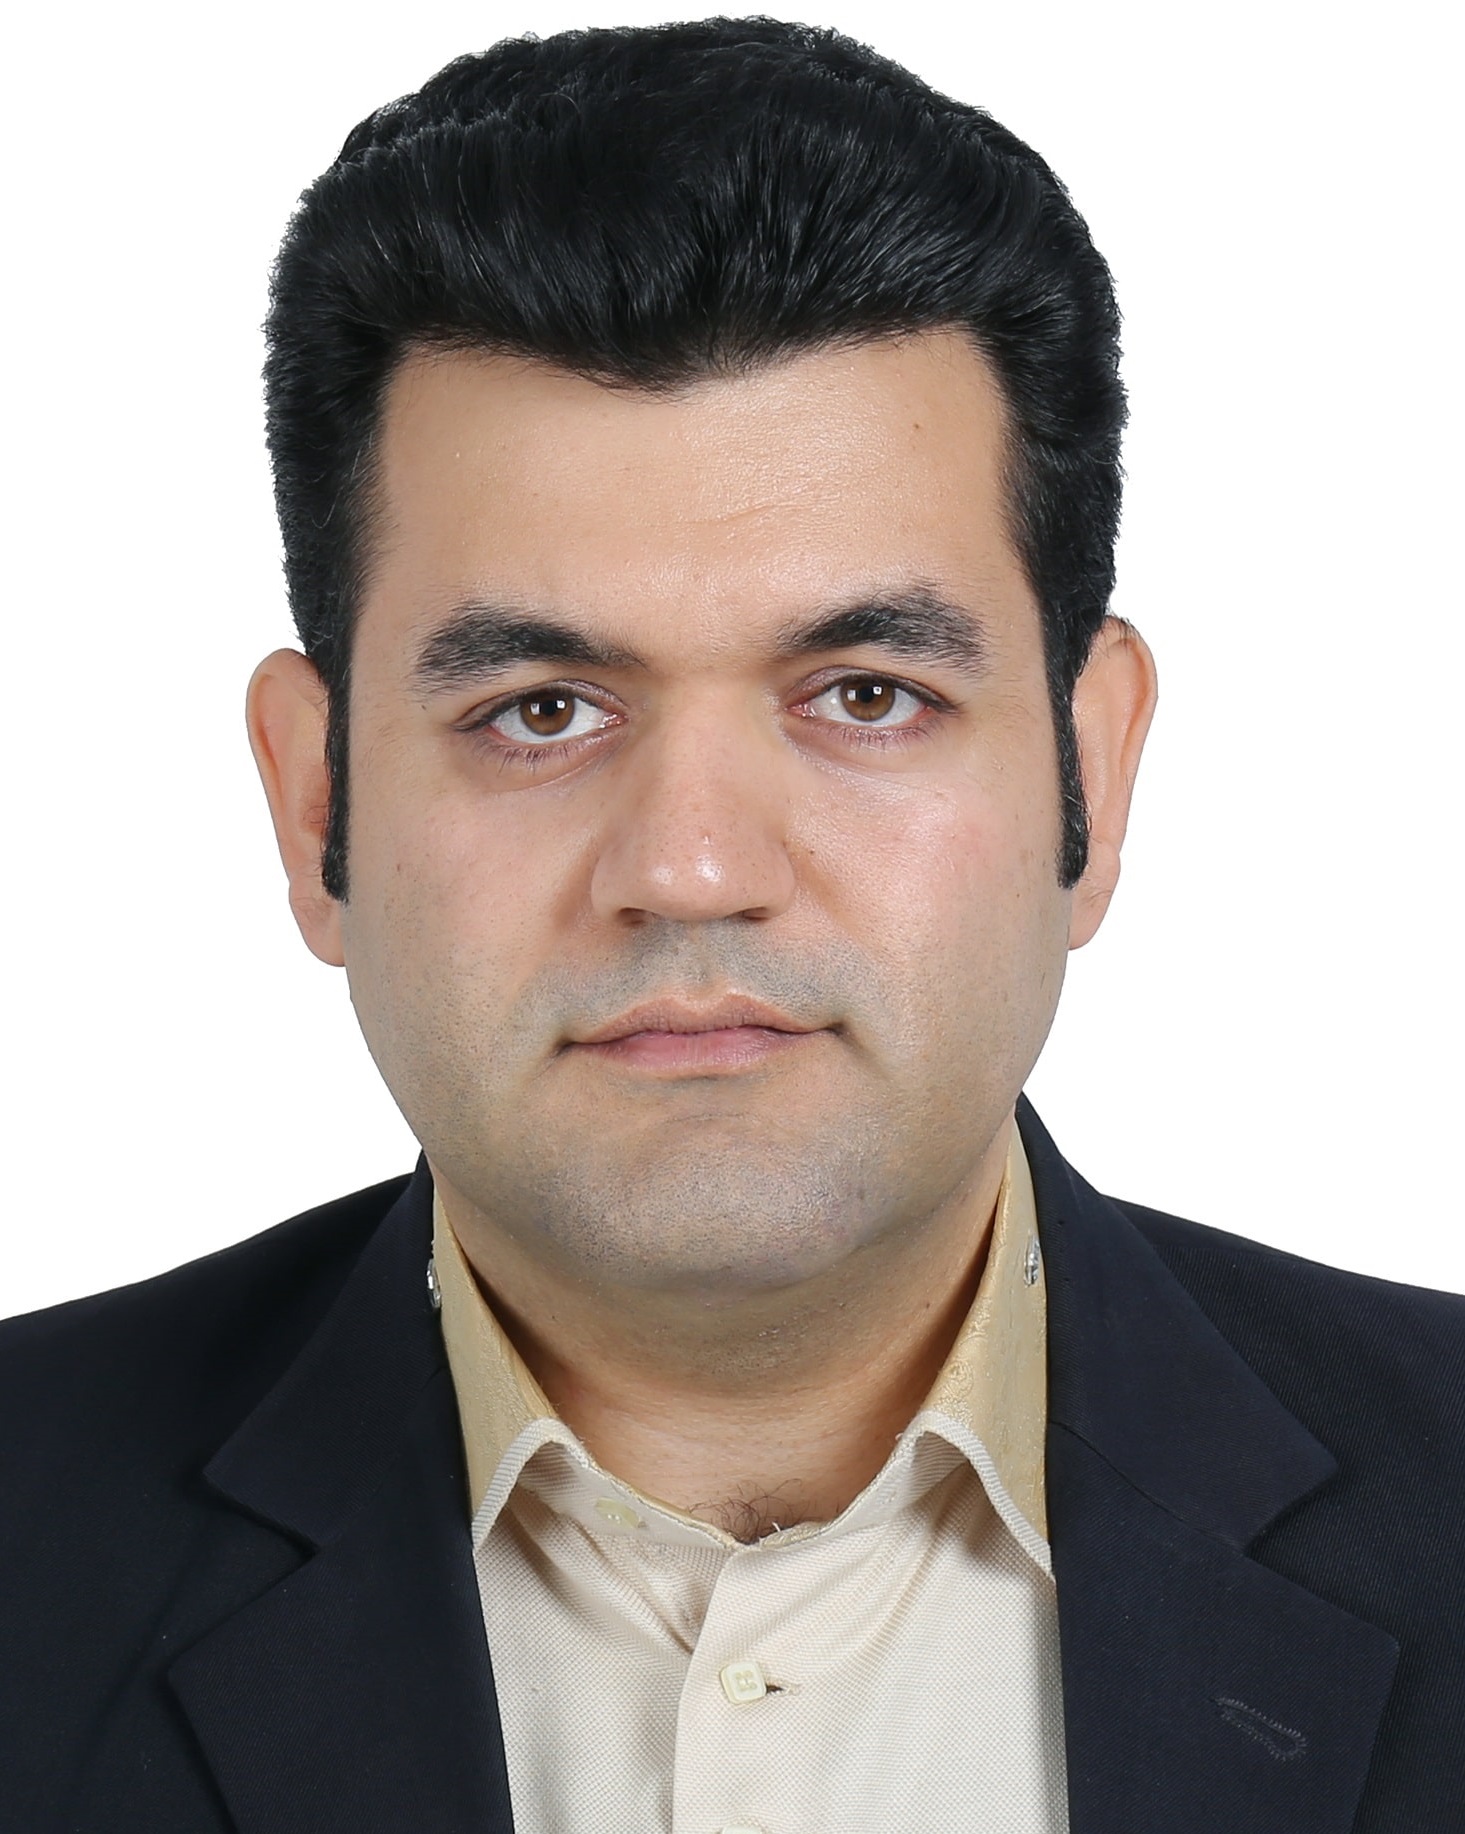 داور حقوقی مازندران - قایم شهر محسن صفائی کوچکسرائی